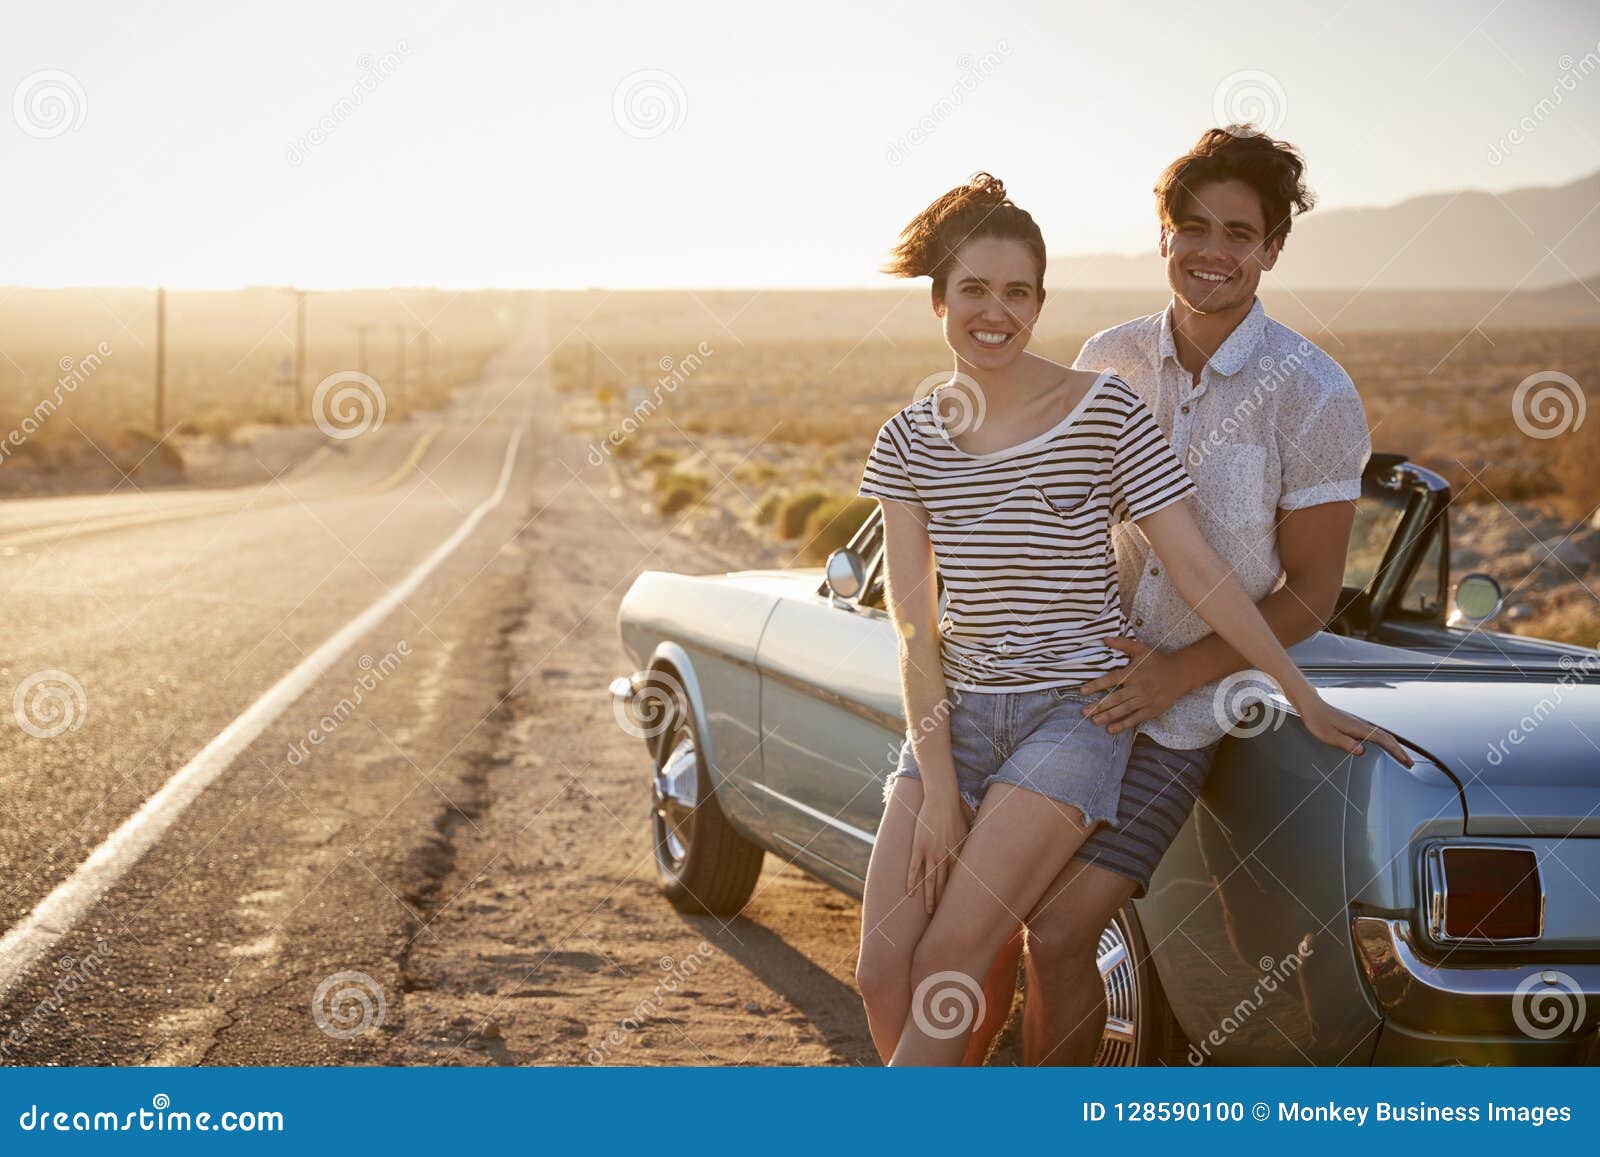 road trip to romance